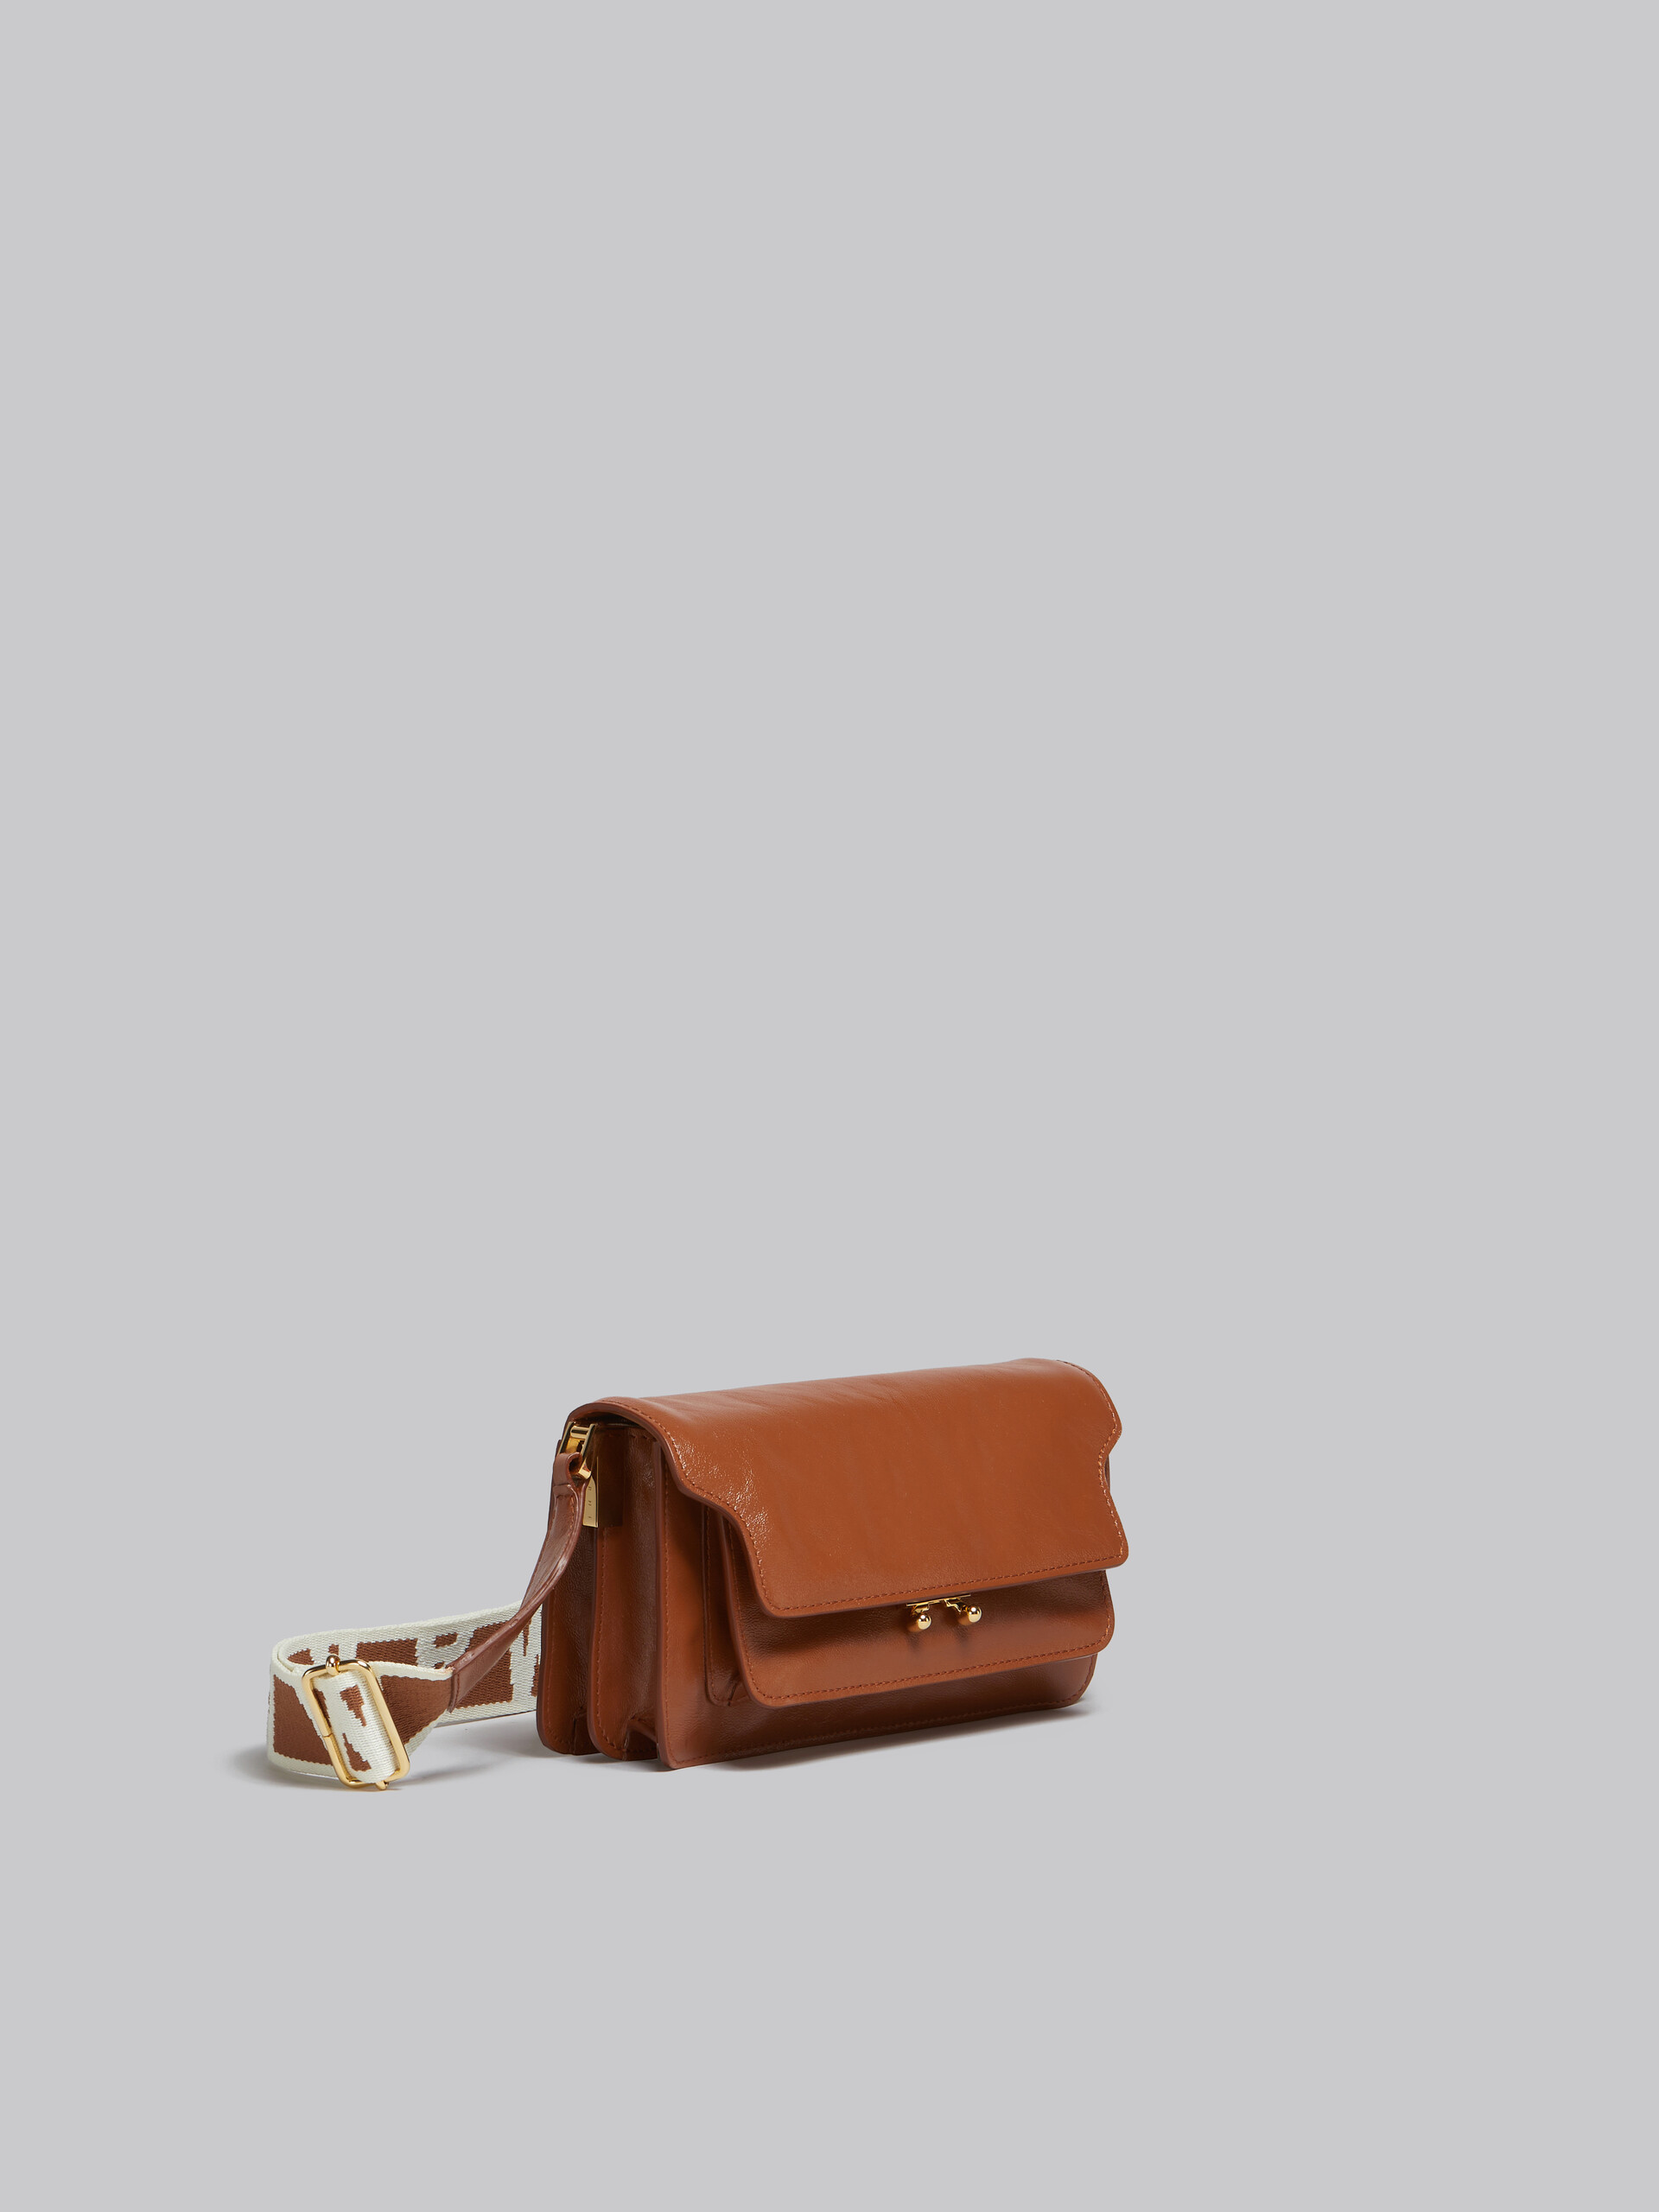 Brown leather E/W Soft Trunk Bag with logo strap - Shoulder Bag - Image 6